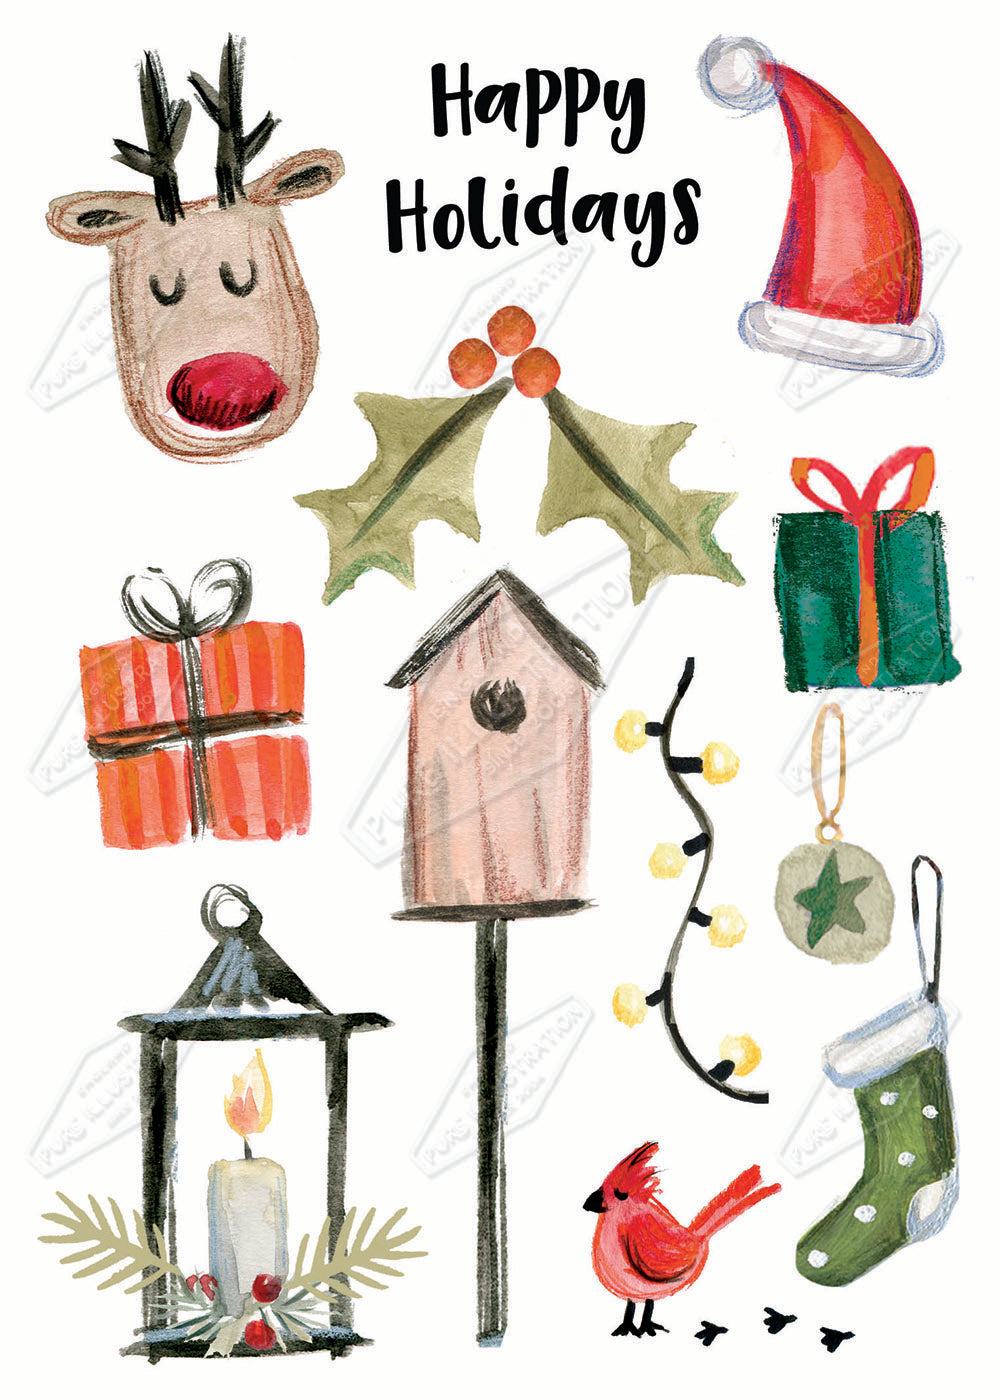 00029738DEV - Deva Evans is represented by Pure Art Licensing Agency - Christmas Greeting Card Design